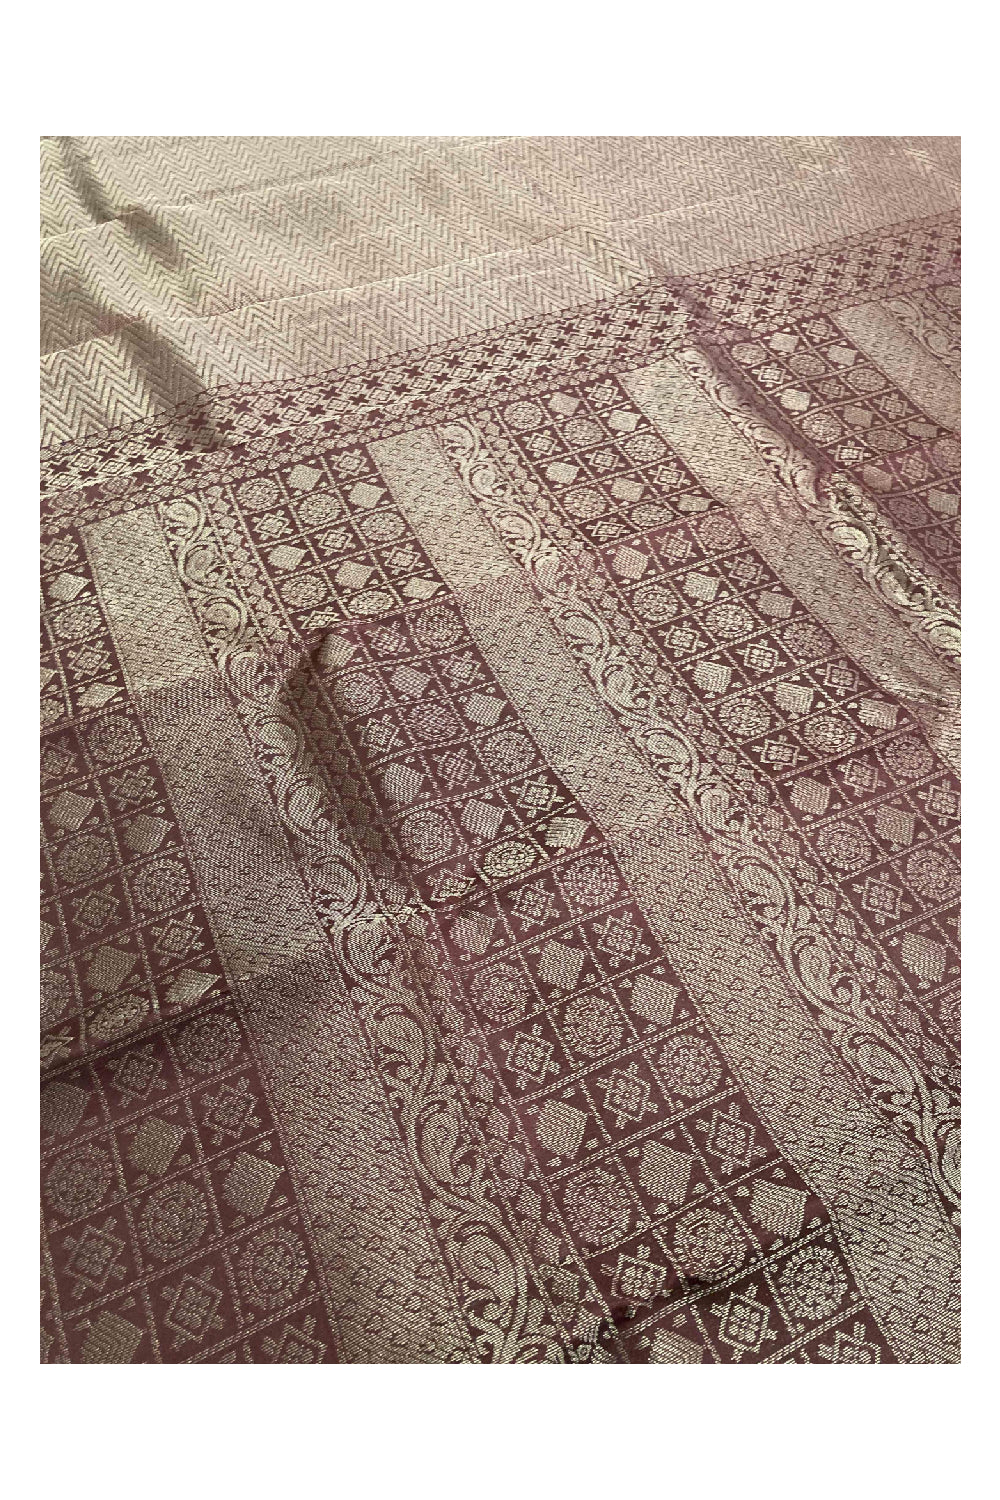 Southloom Handloom Pure Silk Manthrakodi Kanchipuram Saree in Single Brown Colour and Silver Zari Motifs